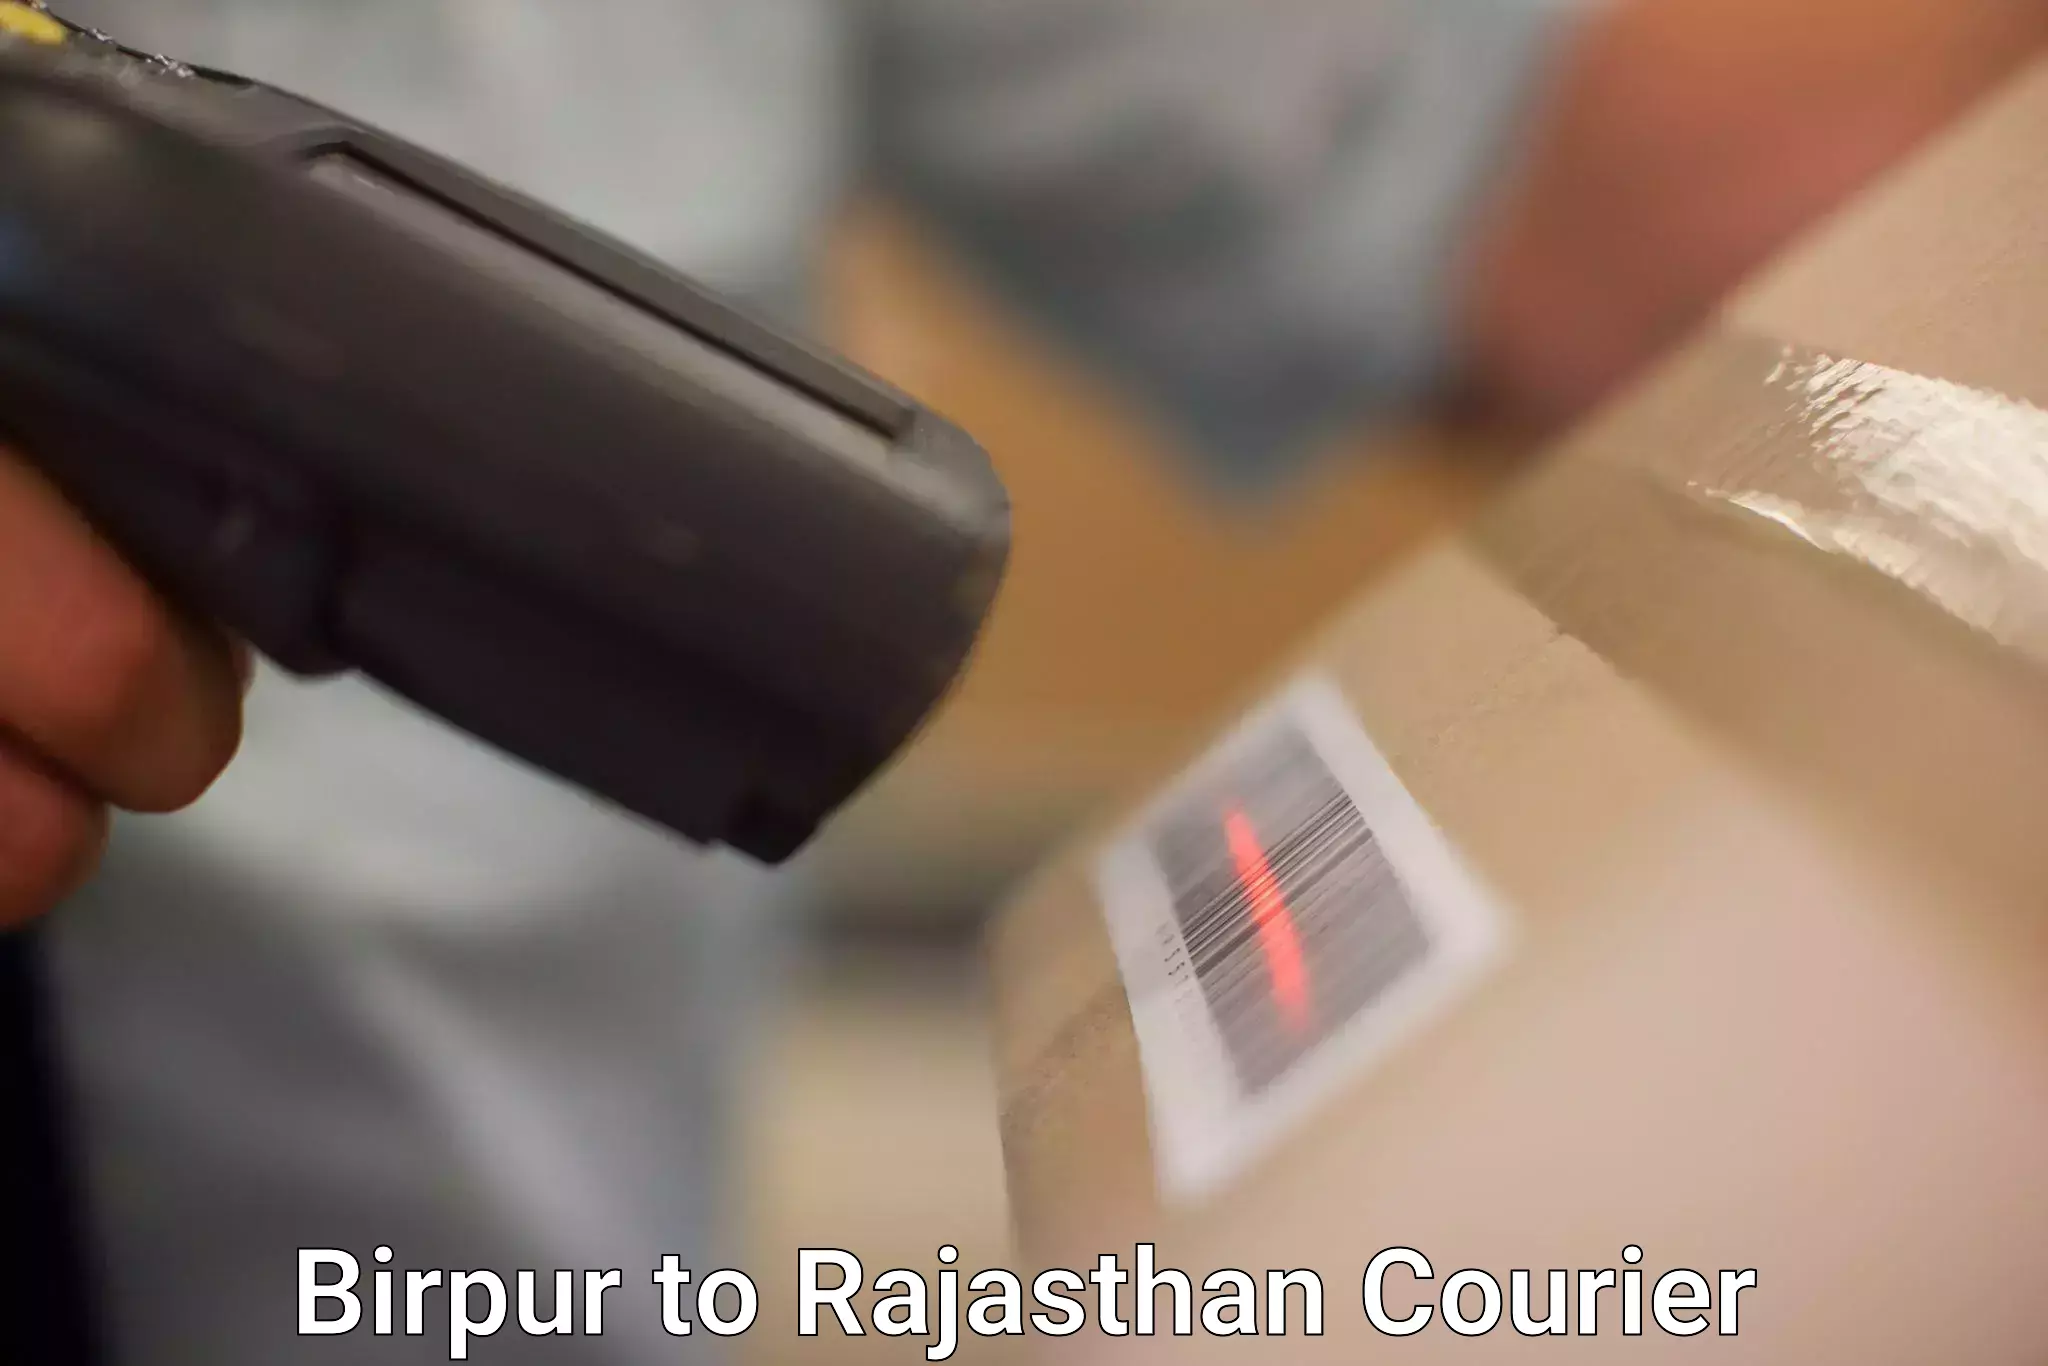 Easy return solutions Birpur to Rajasthan